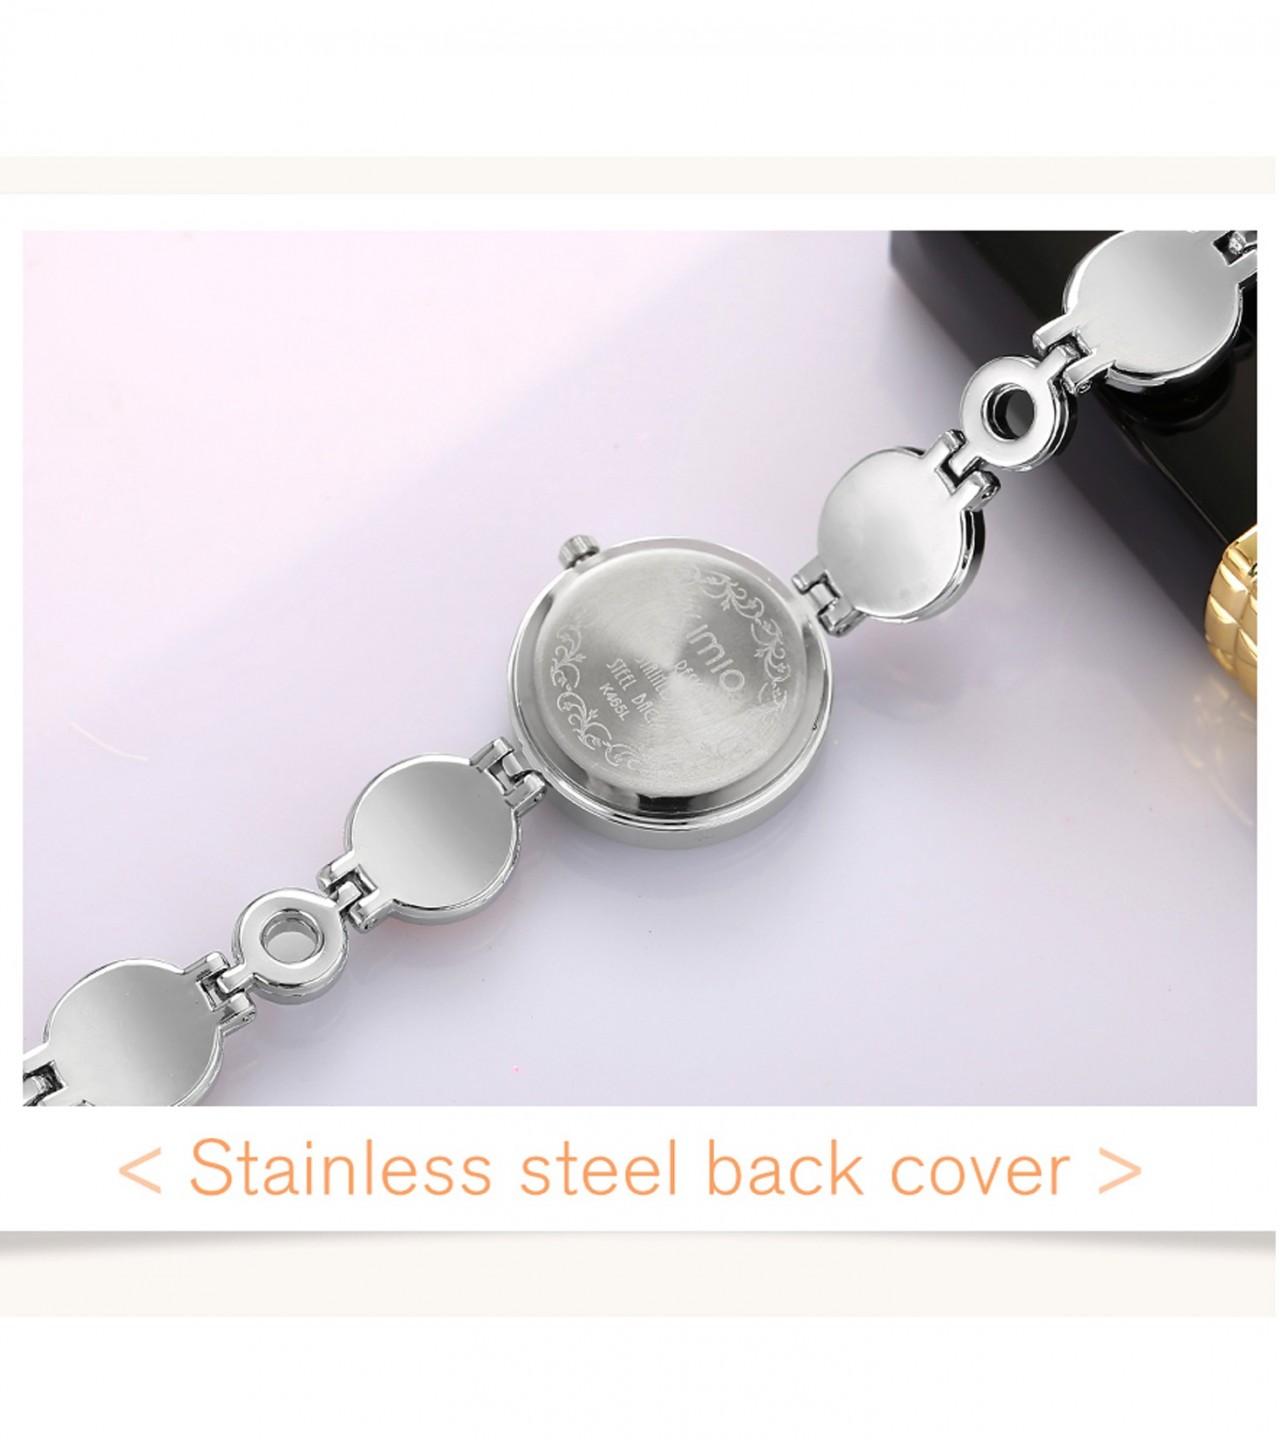 Fashion Crystal Stone Bracelet Watch For Women / Girls - Pink